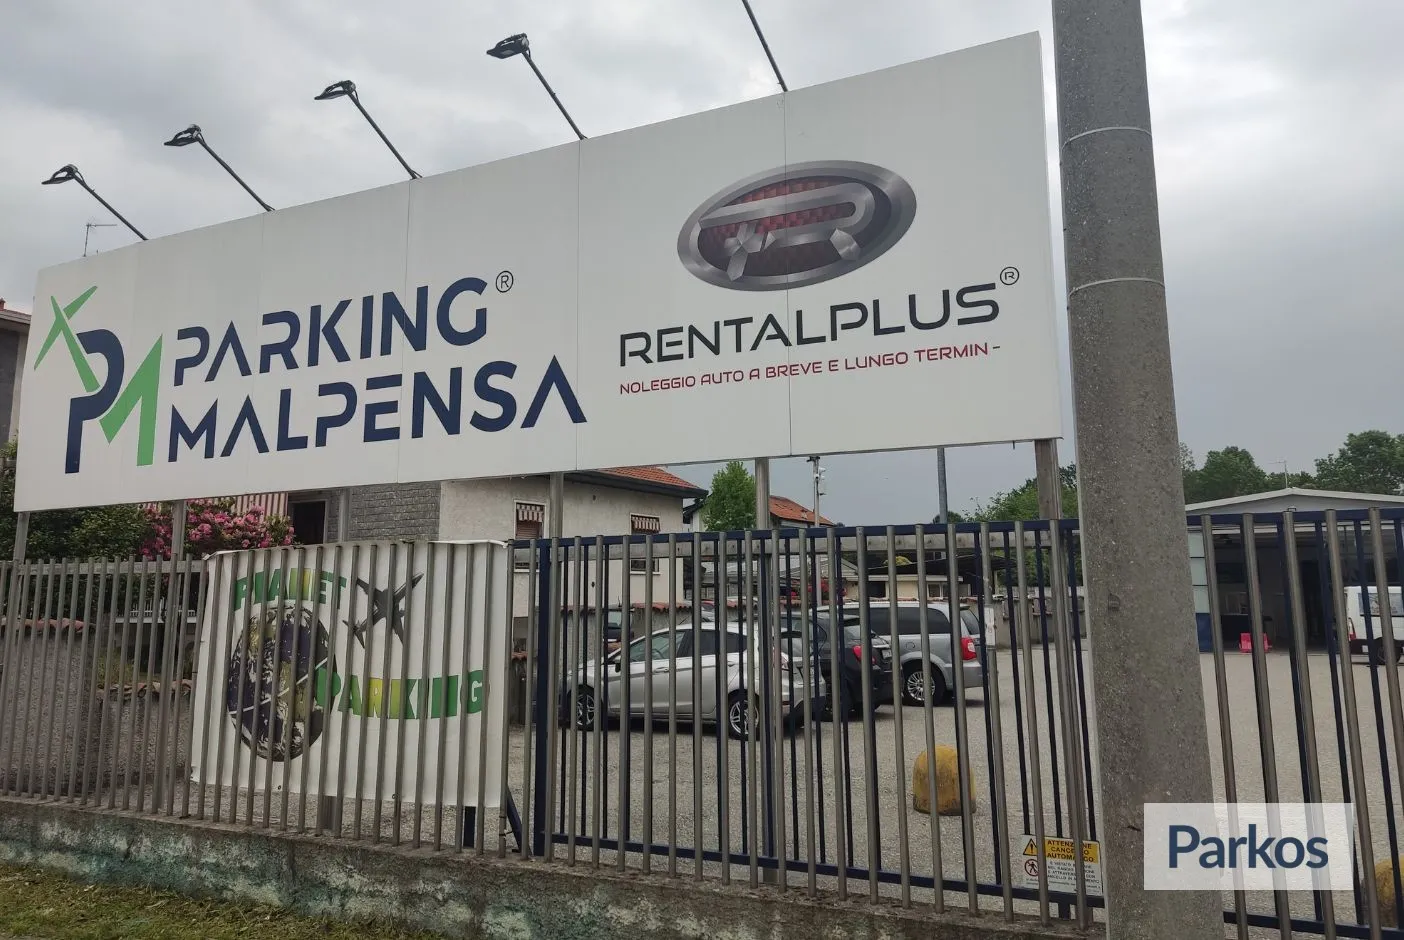 Planet Parking Malpensa (Paga in parcheggio) - Malpensa Airport Parking - picture 1